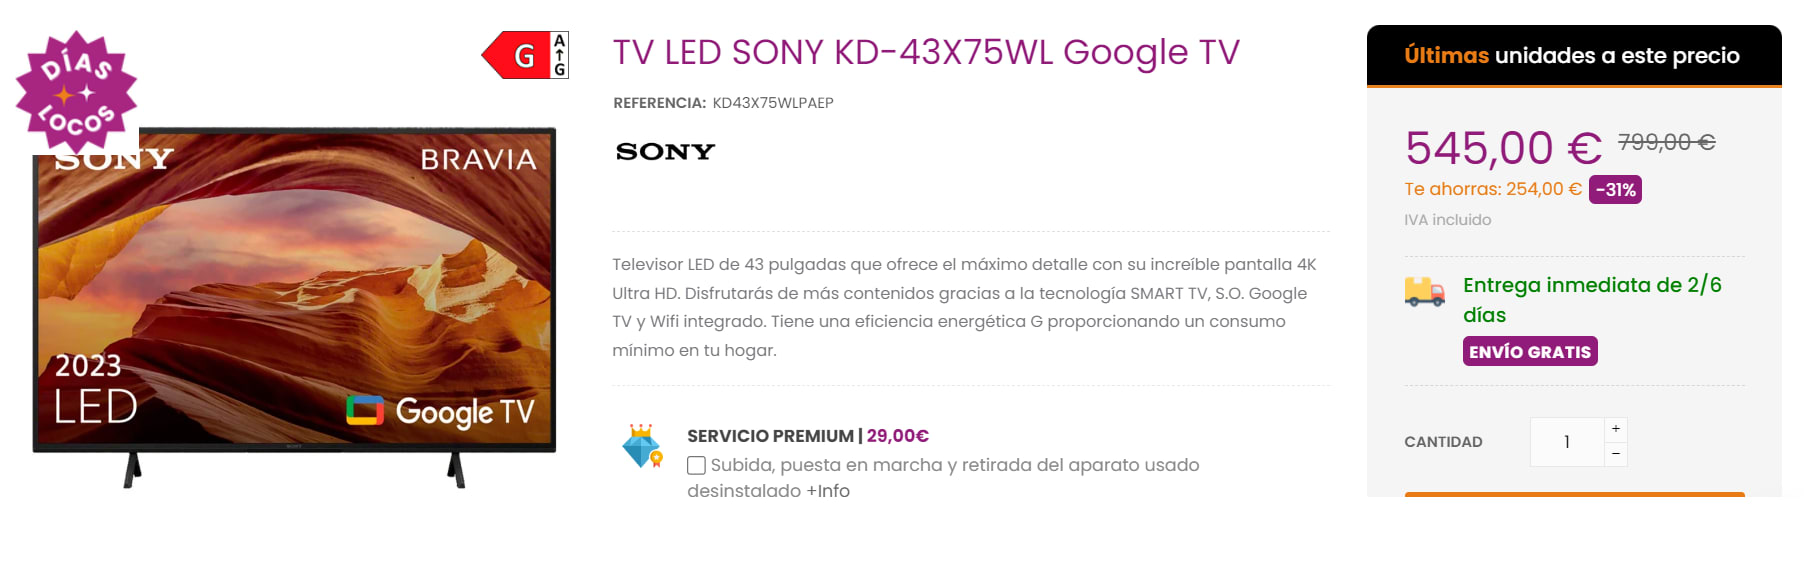 Sony KD-43X75WL, Televisor LED 43”, 4K HDR, Smart TV Google TV